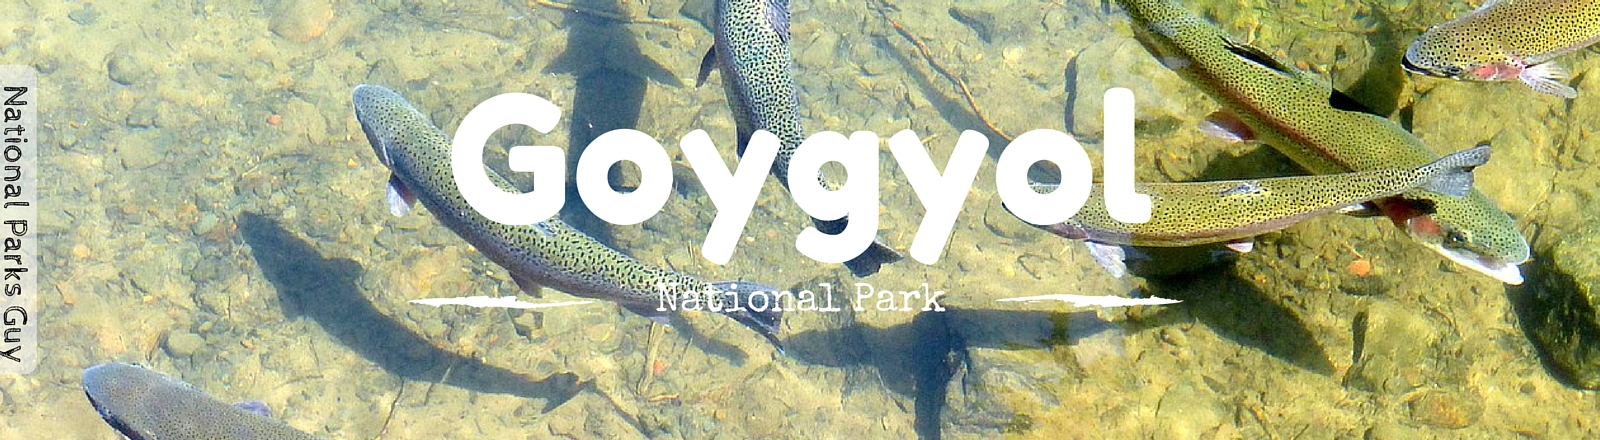 Goygyol National Park, Azerbaijan, National Parks Guy